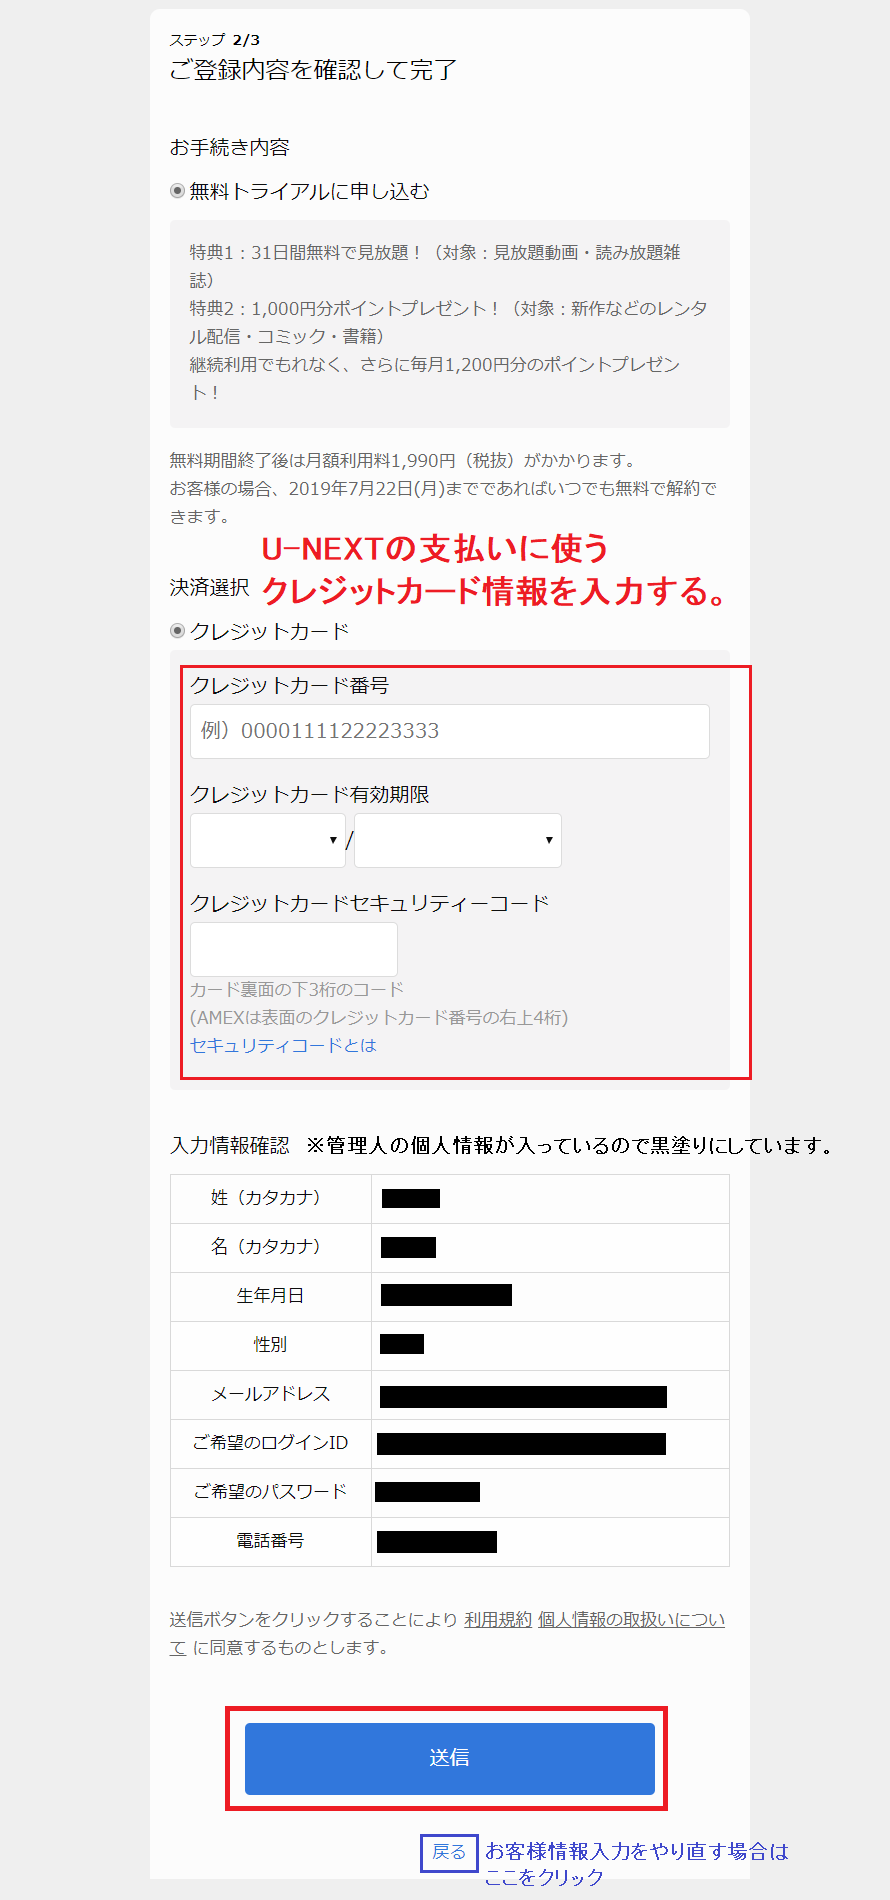 U-NEXT_入会登録ステップ2_登録内容確認とクレジットカード情報入力